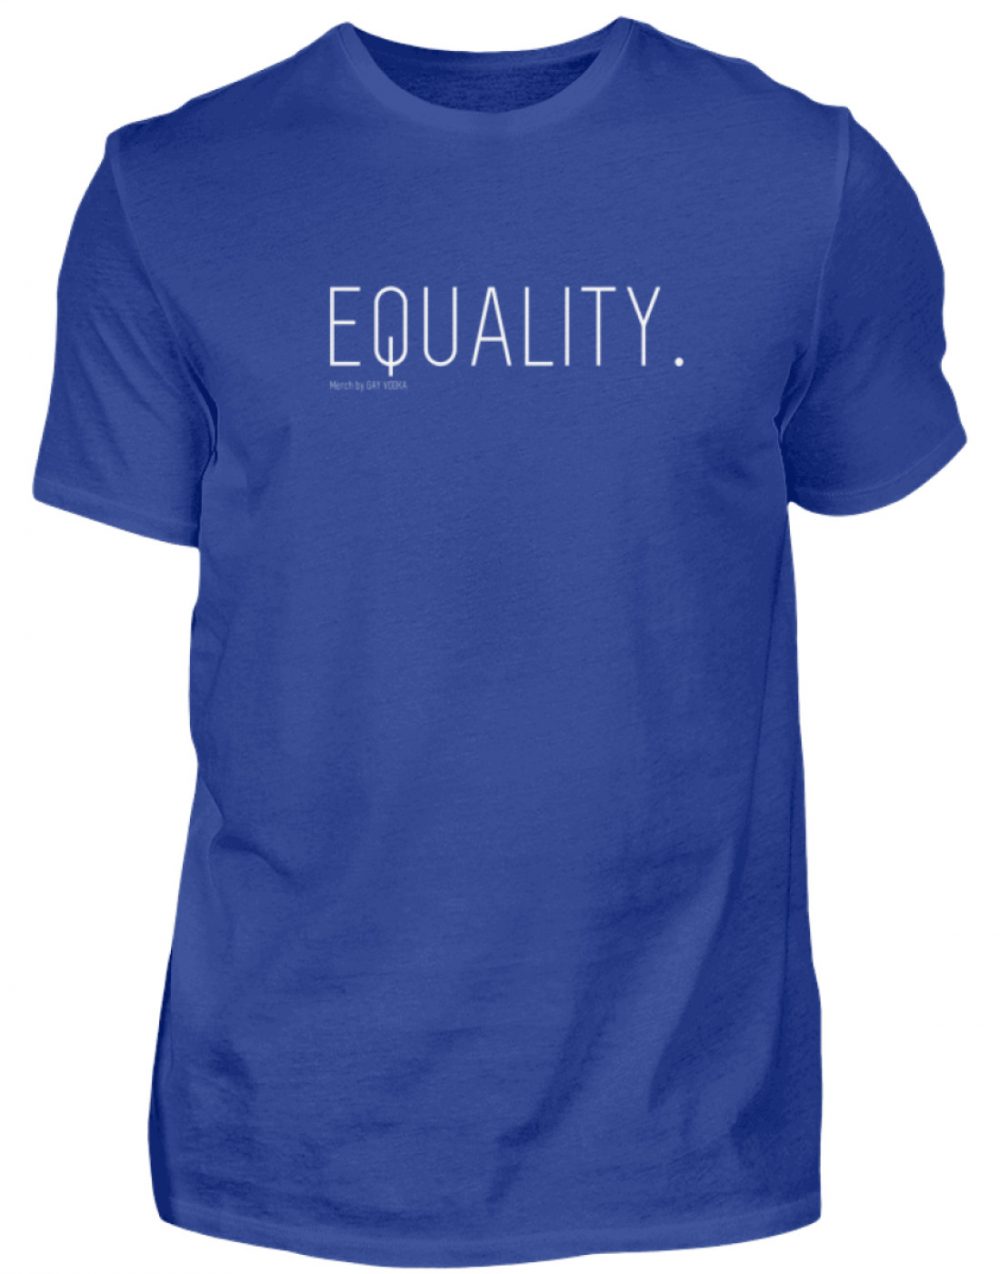 EQUALITY. - Herren Premiumshirt-27